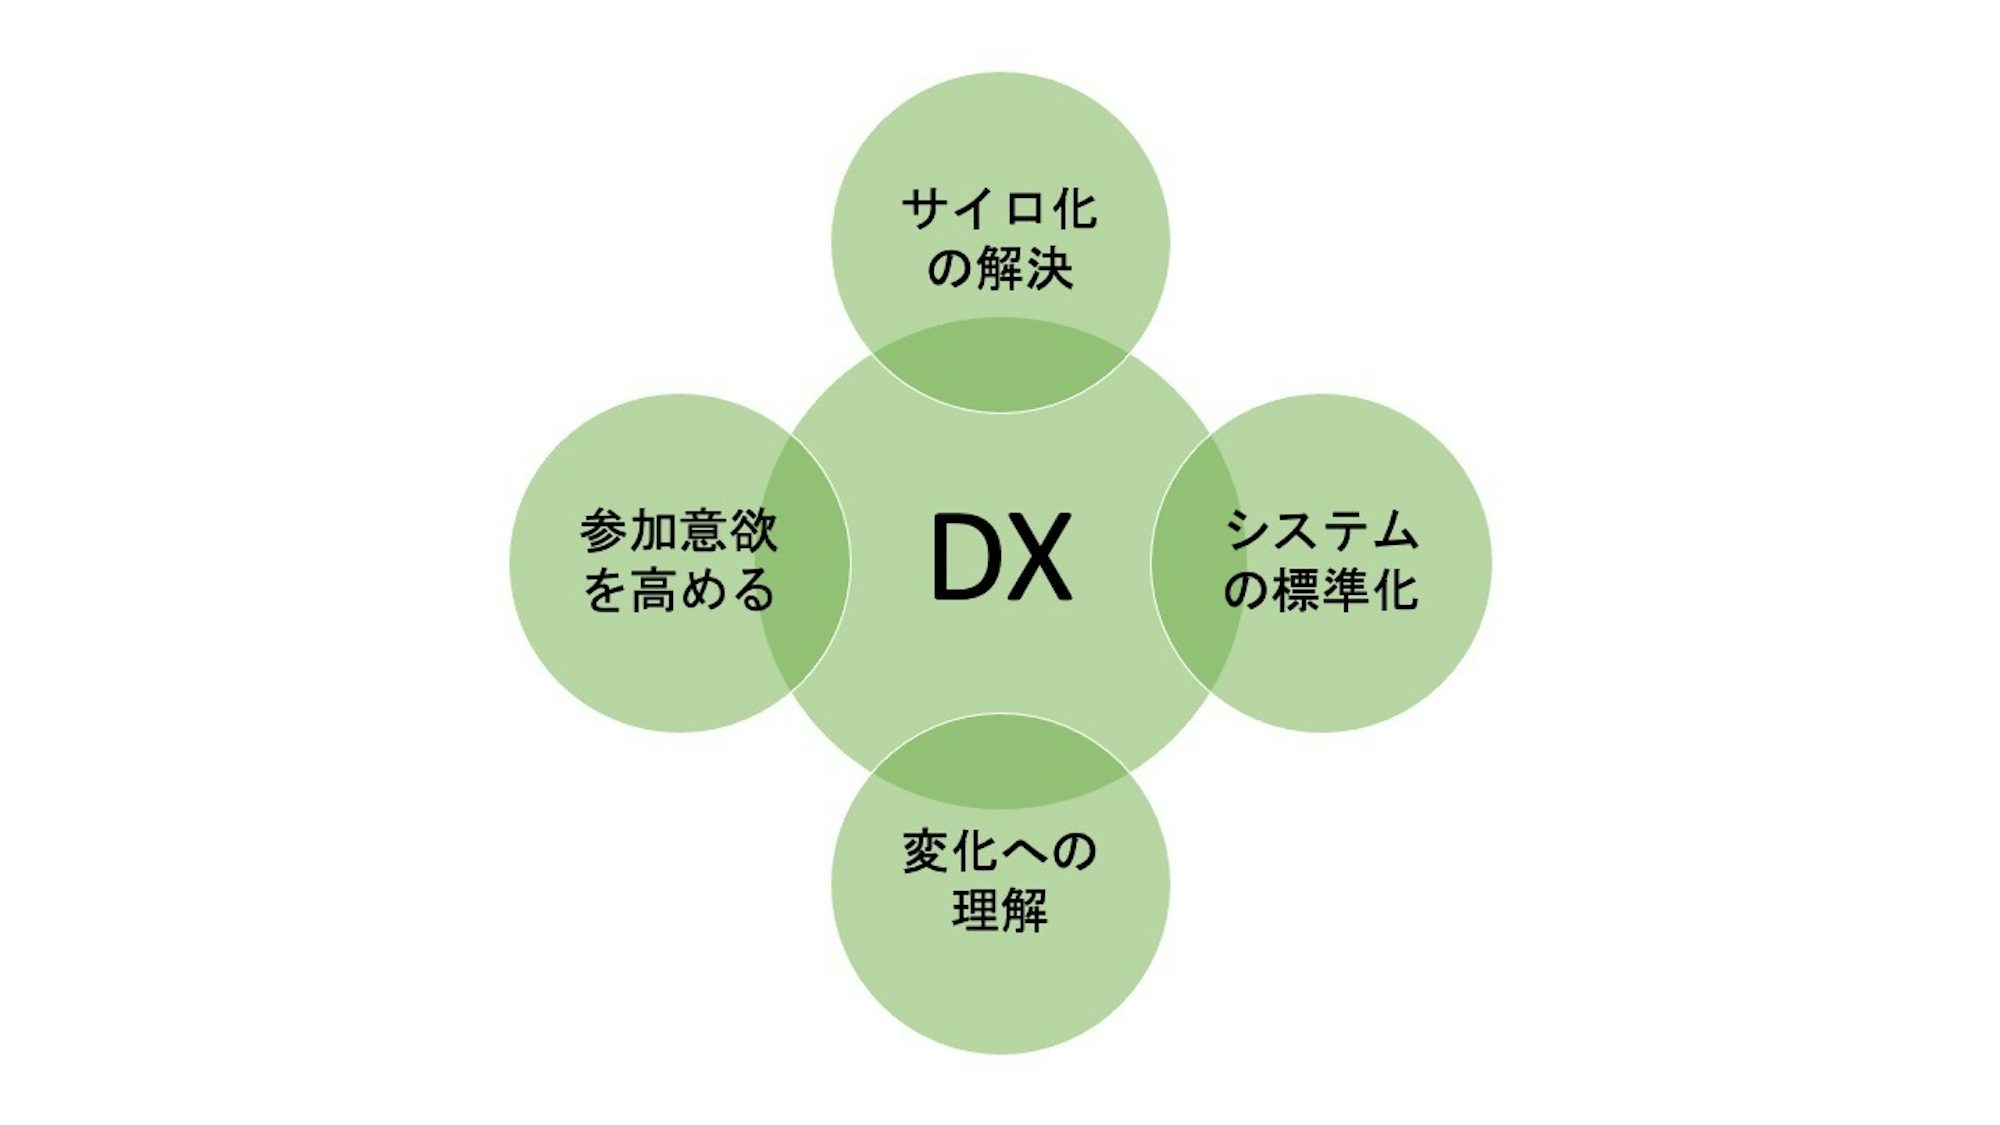 DX（デジタルトランスフォーメーション）とは？